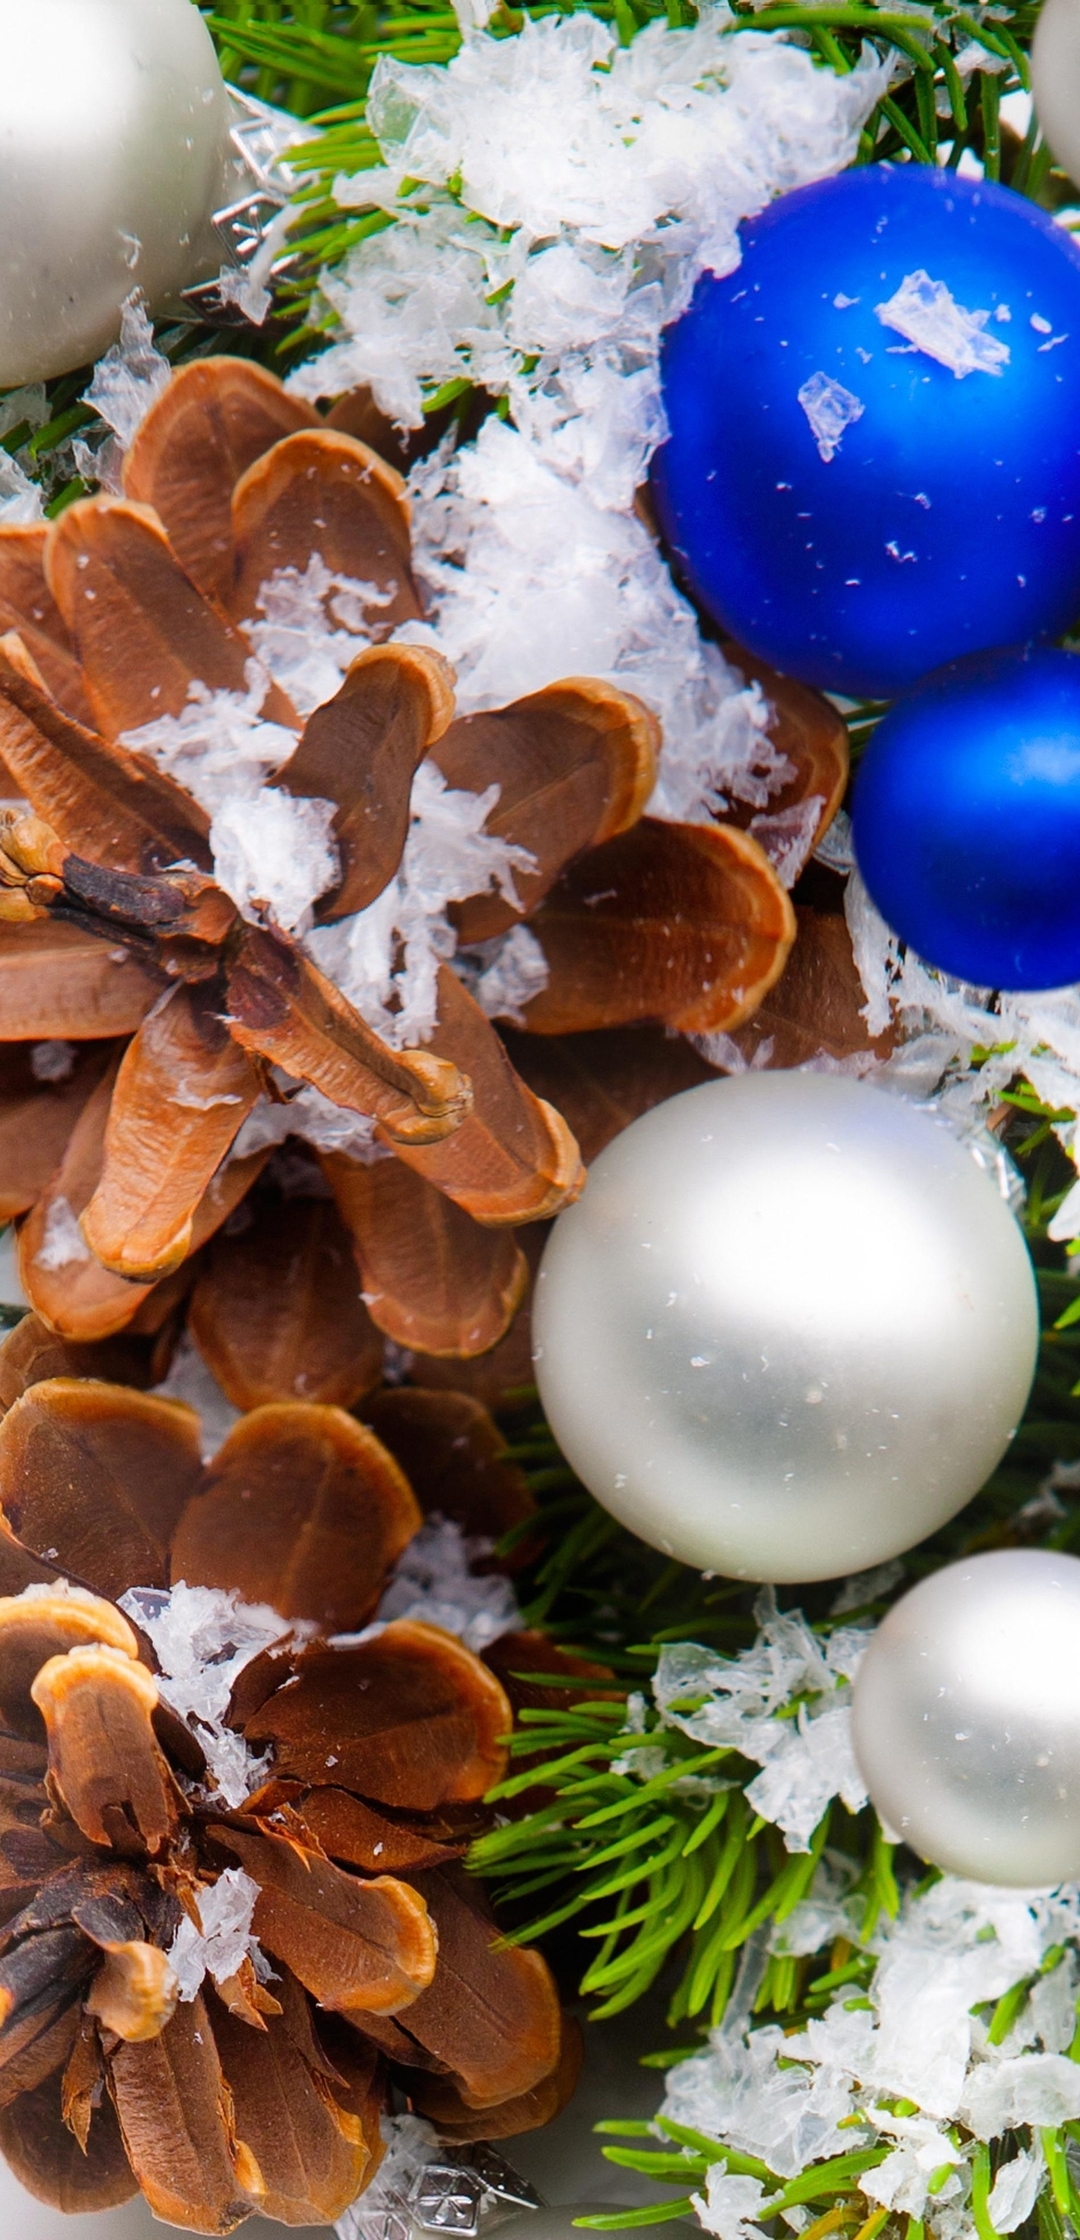 Image: Cones, balls, New year, branch, winter, decor